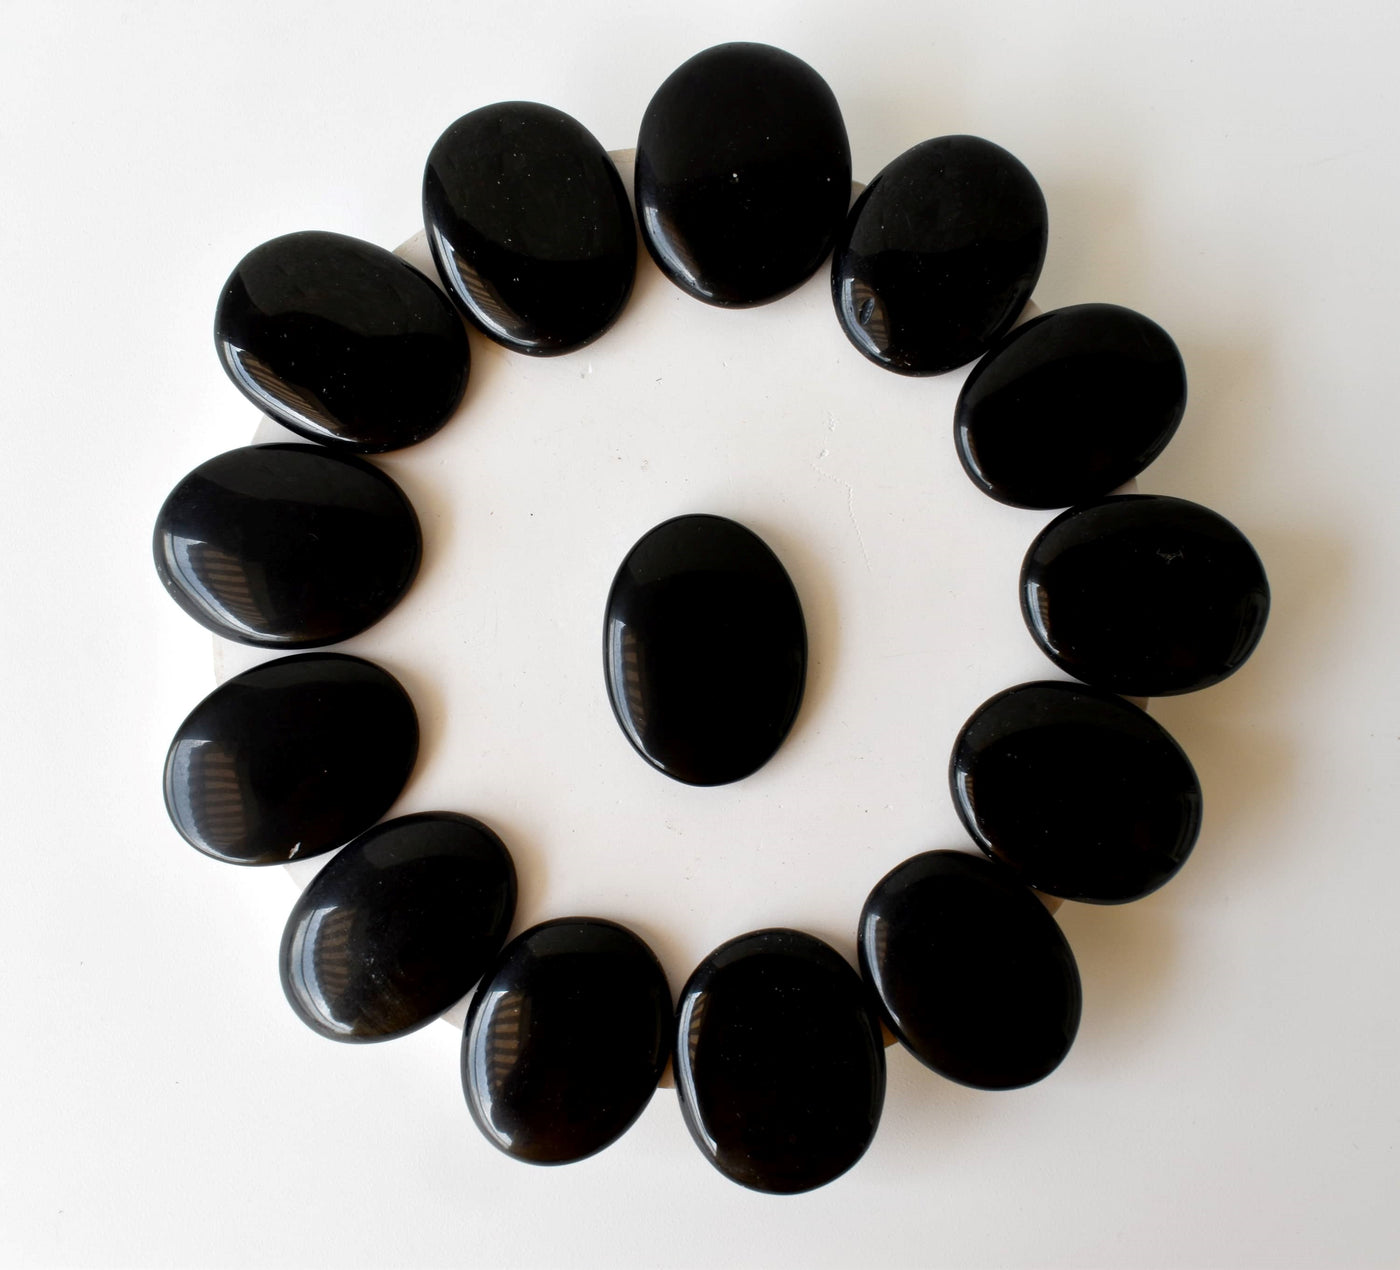 Black Obsidian Pocket Stones (Personal Growth and Traumas)